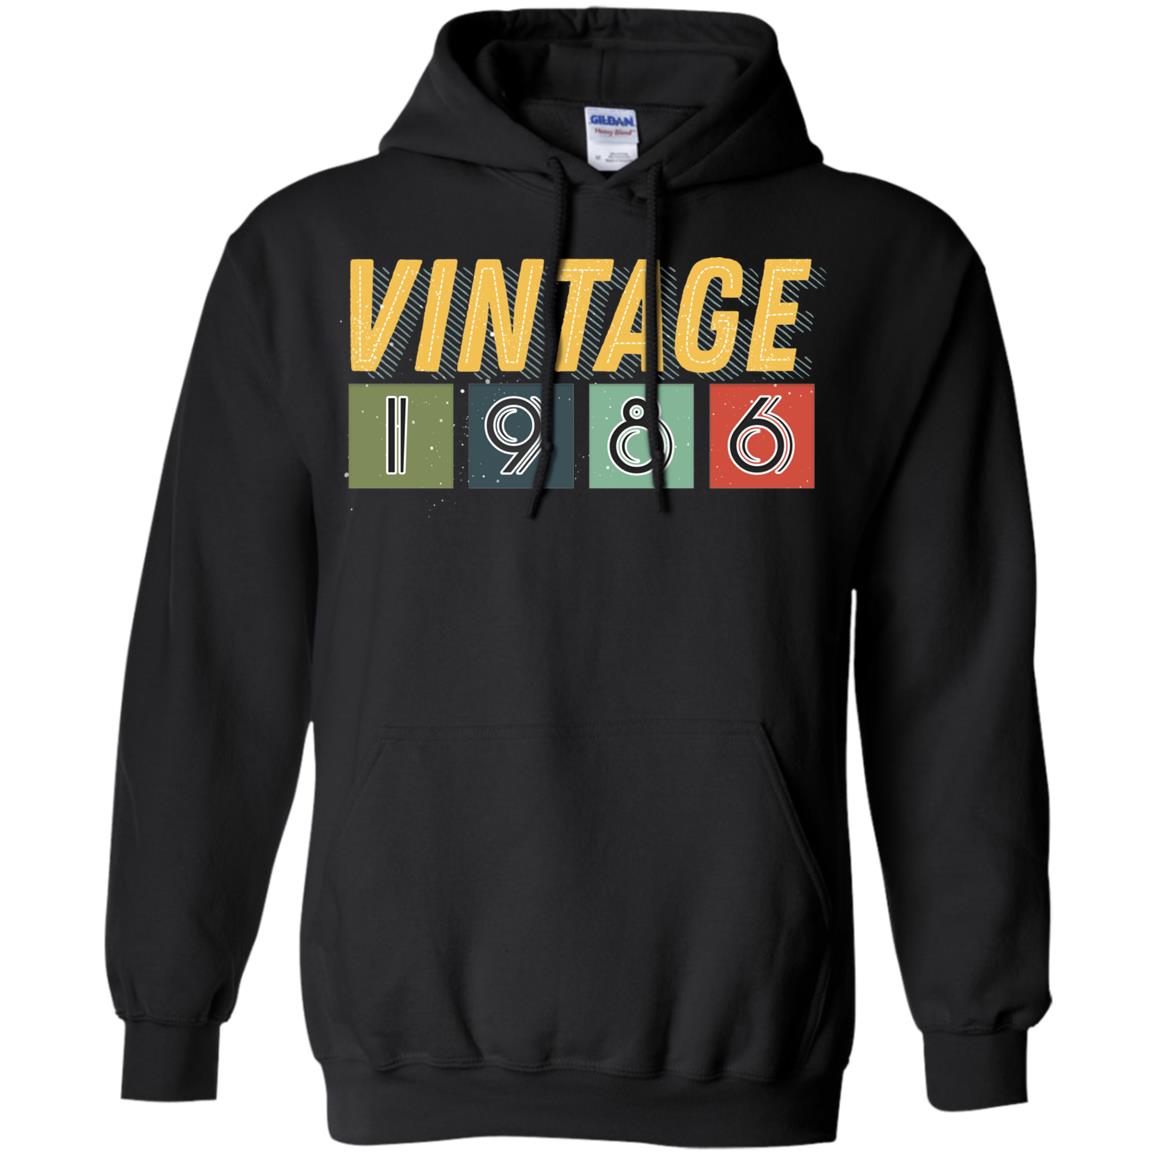 Vintage 1986 32th Birthday Gift Shirt For Mens Or WomensG185 Gildan Pullover Hoodie 8 oz.